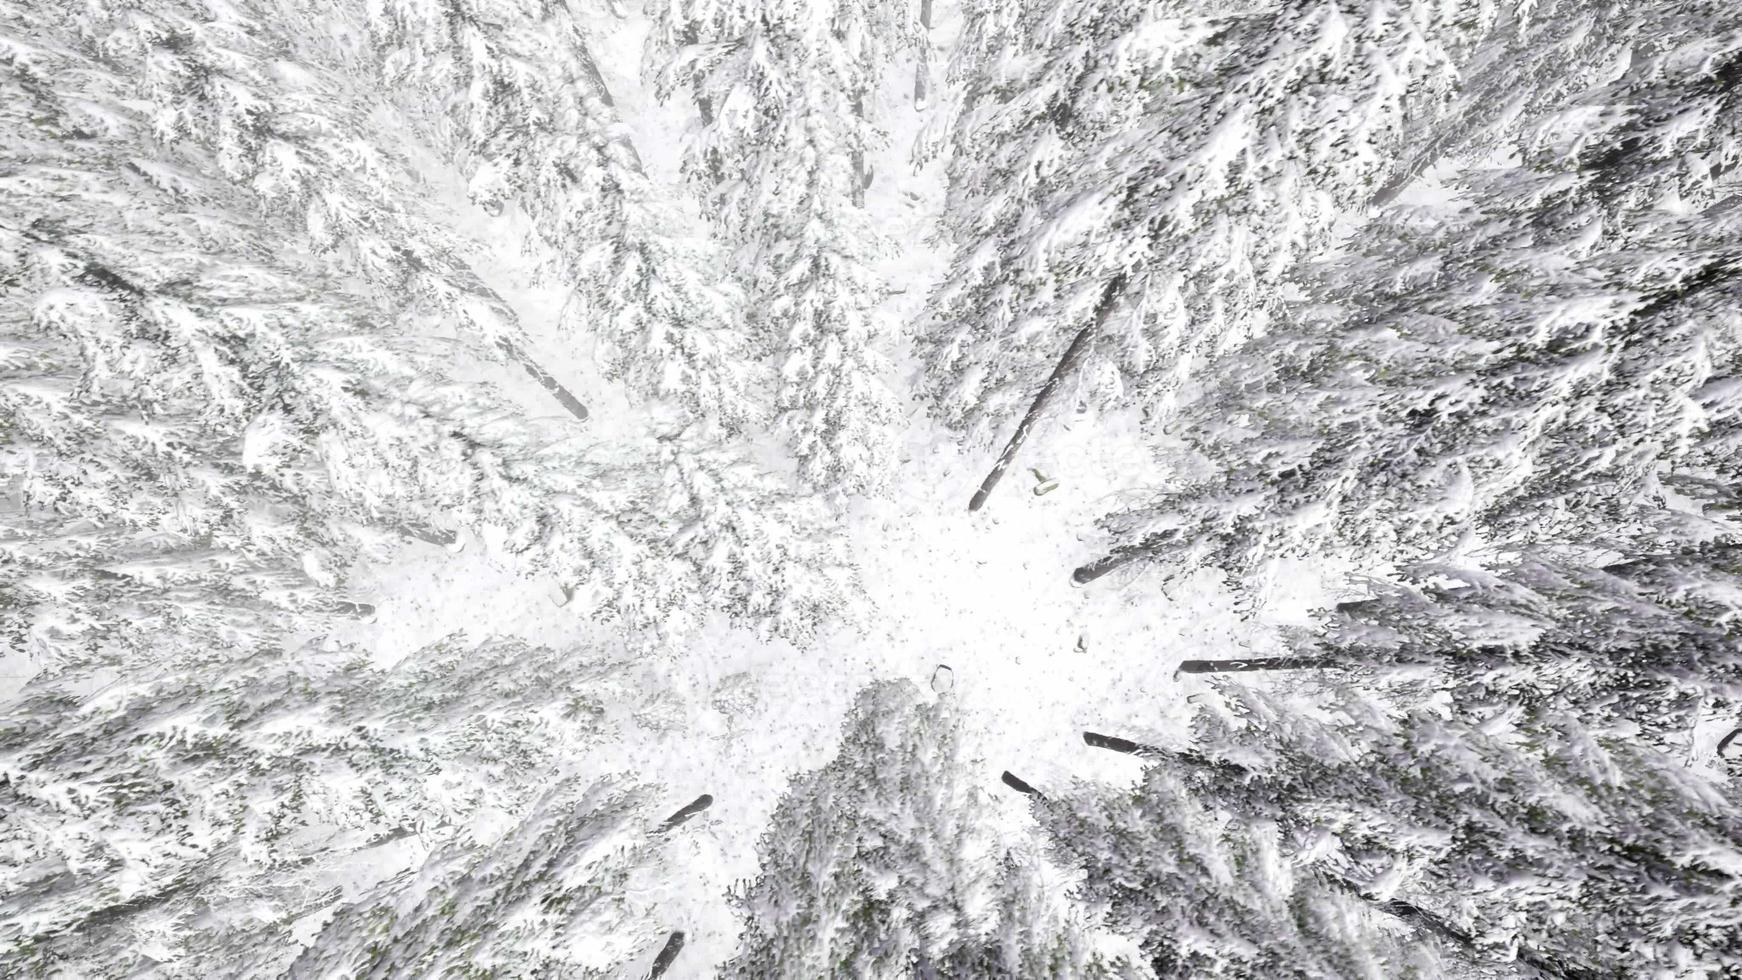 Flight above Winter Forest photo